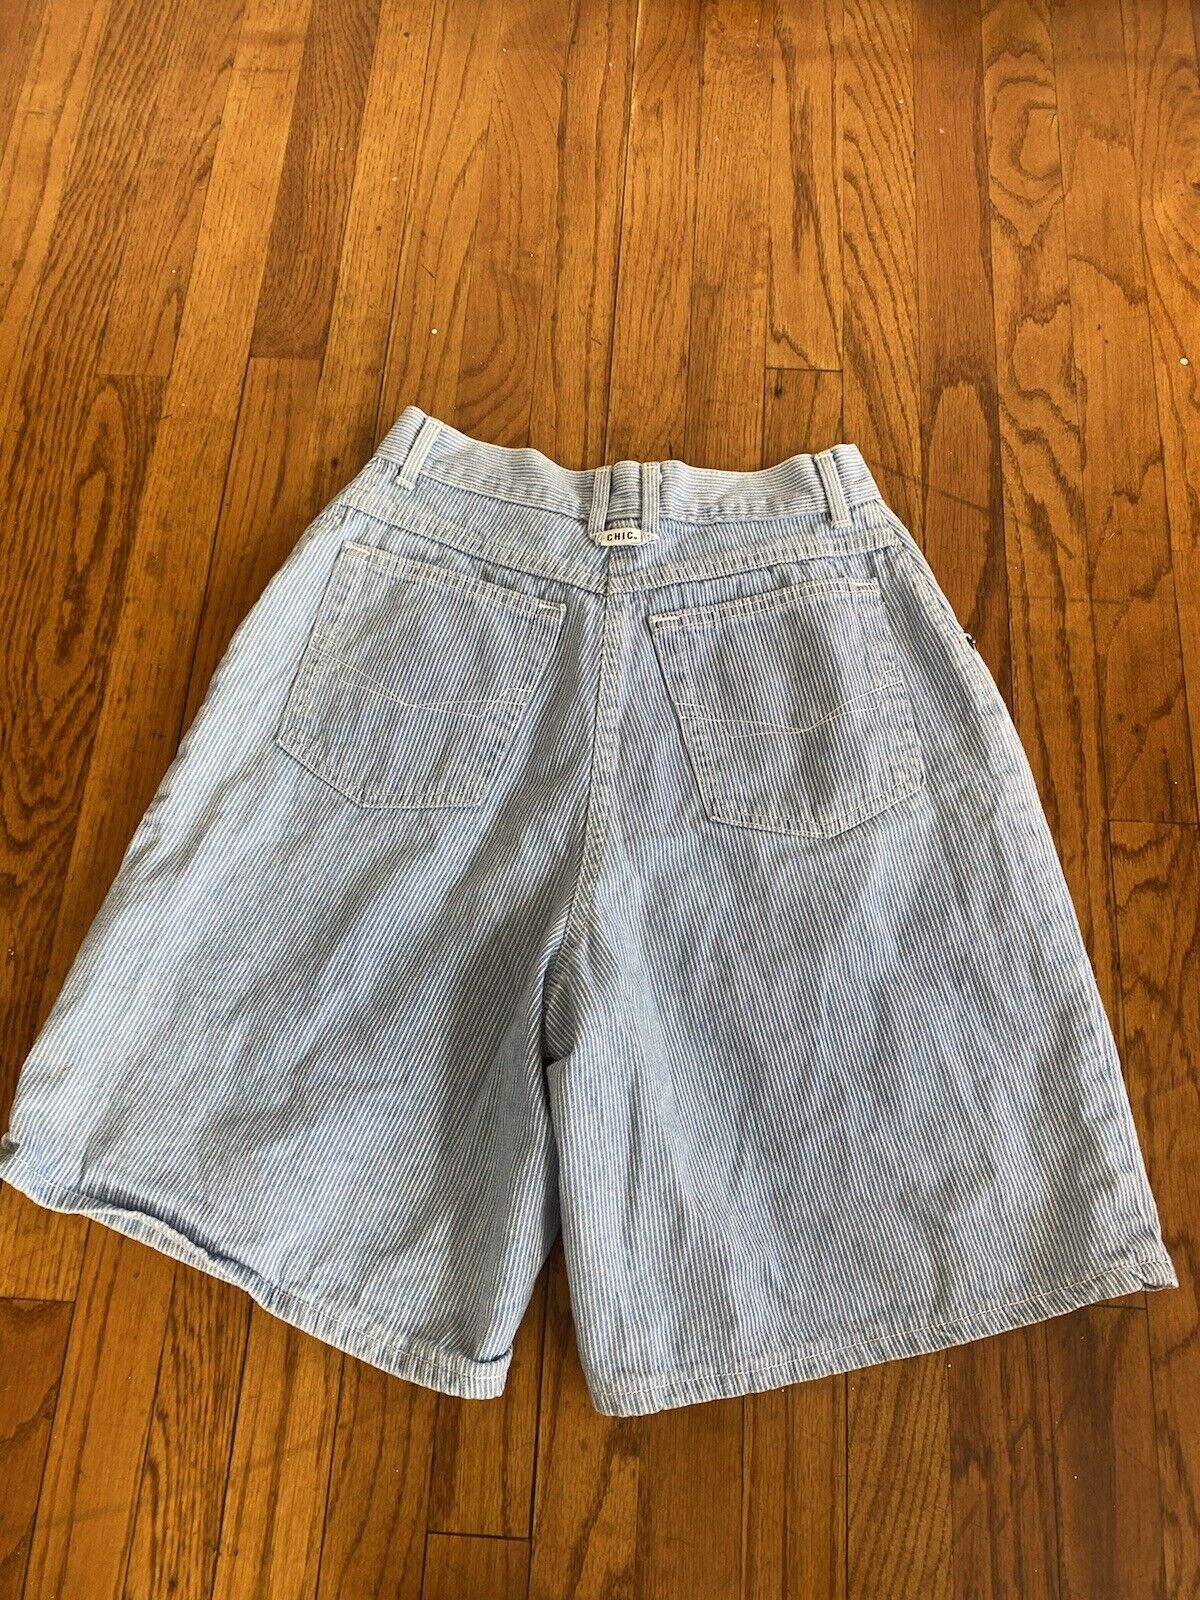 Vintage Stripe Bermuda Shorts - Chic - Size XS - # 1912